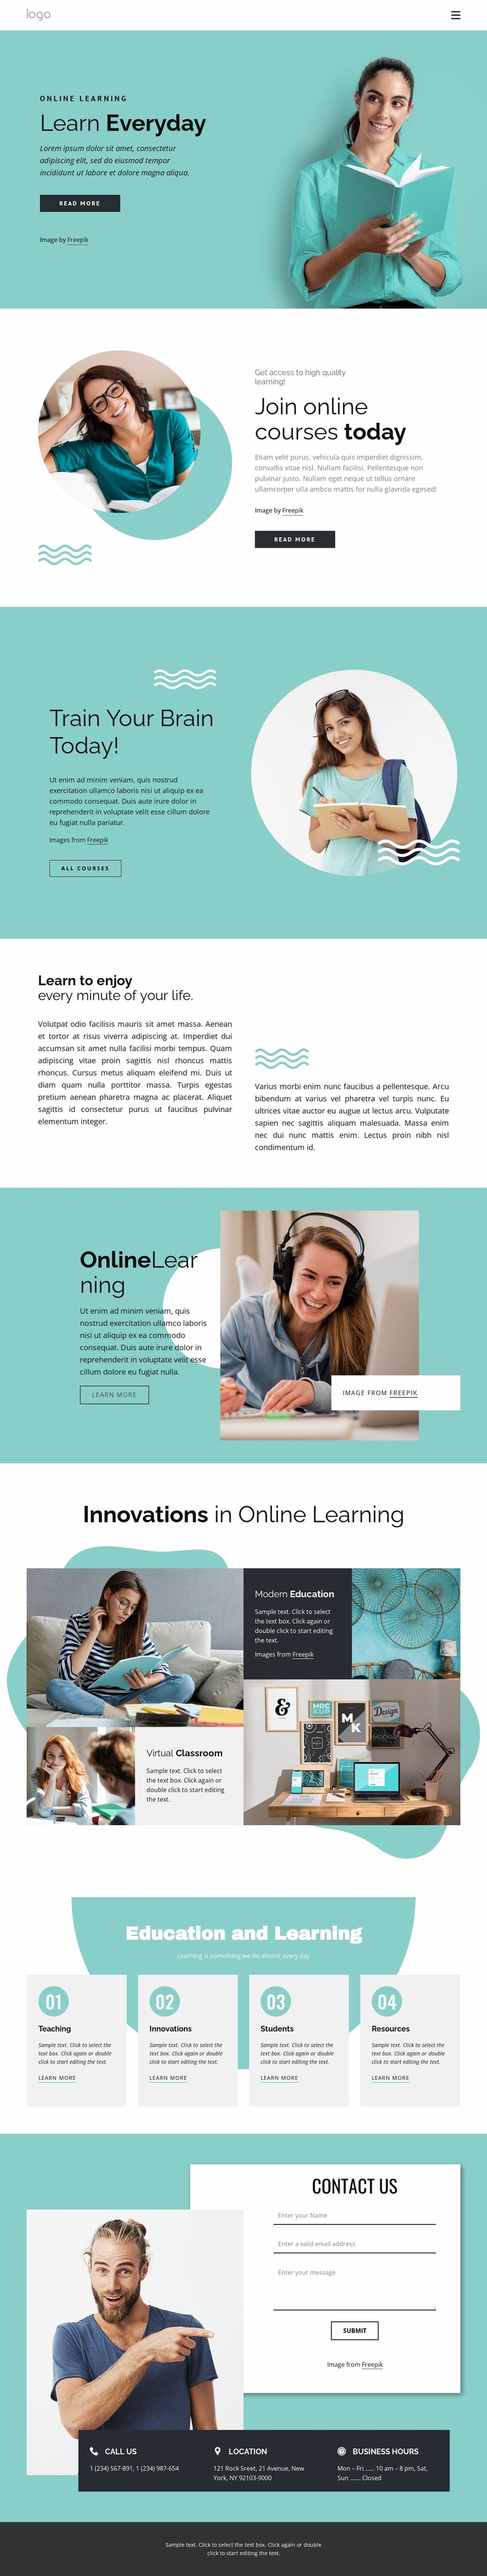 Learning is a lifelong process Website Design